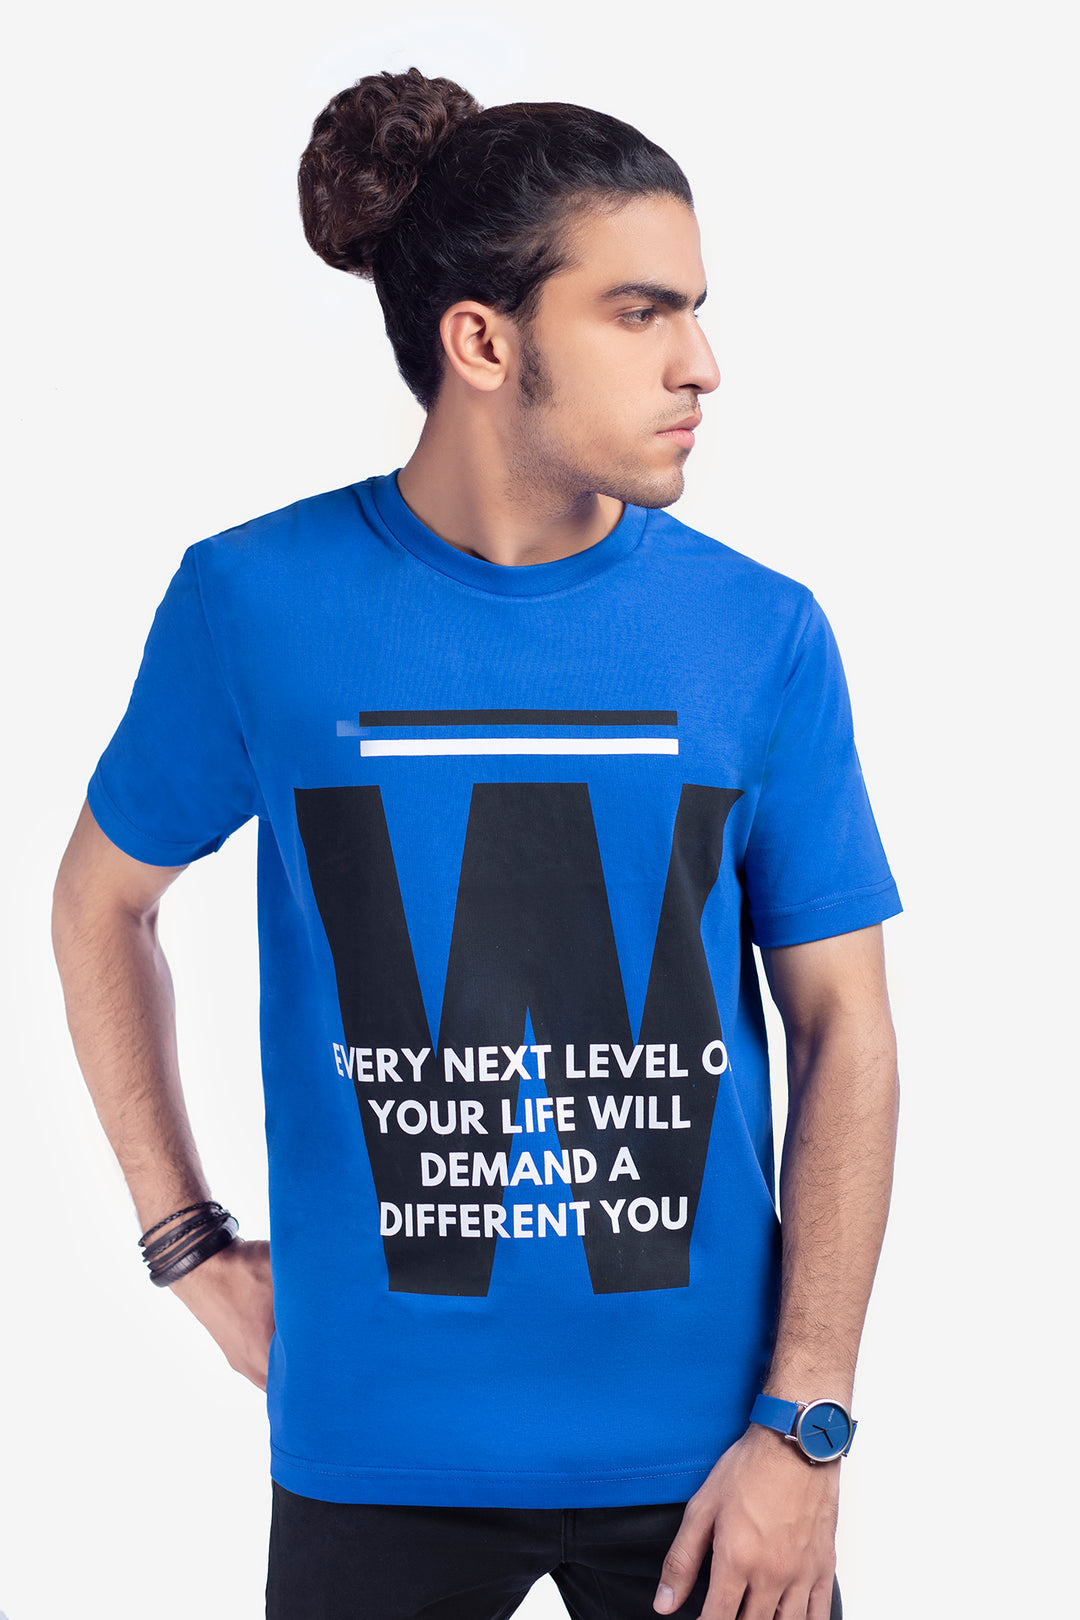 Motivational T-Shirts in Pakistan